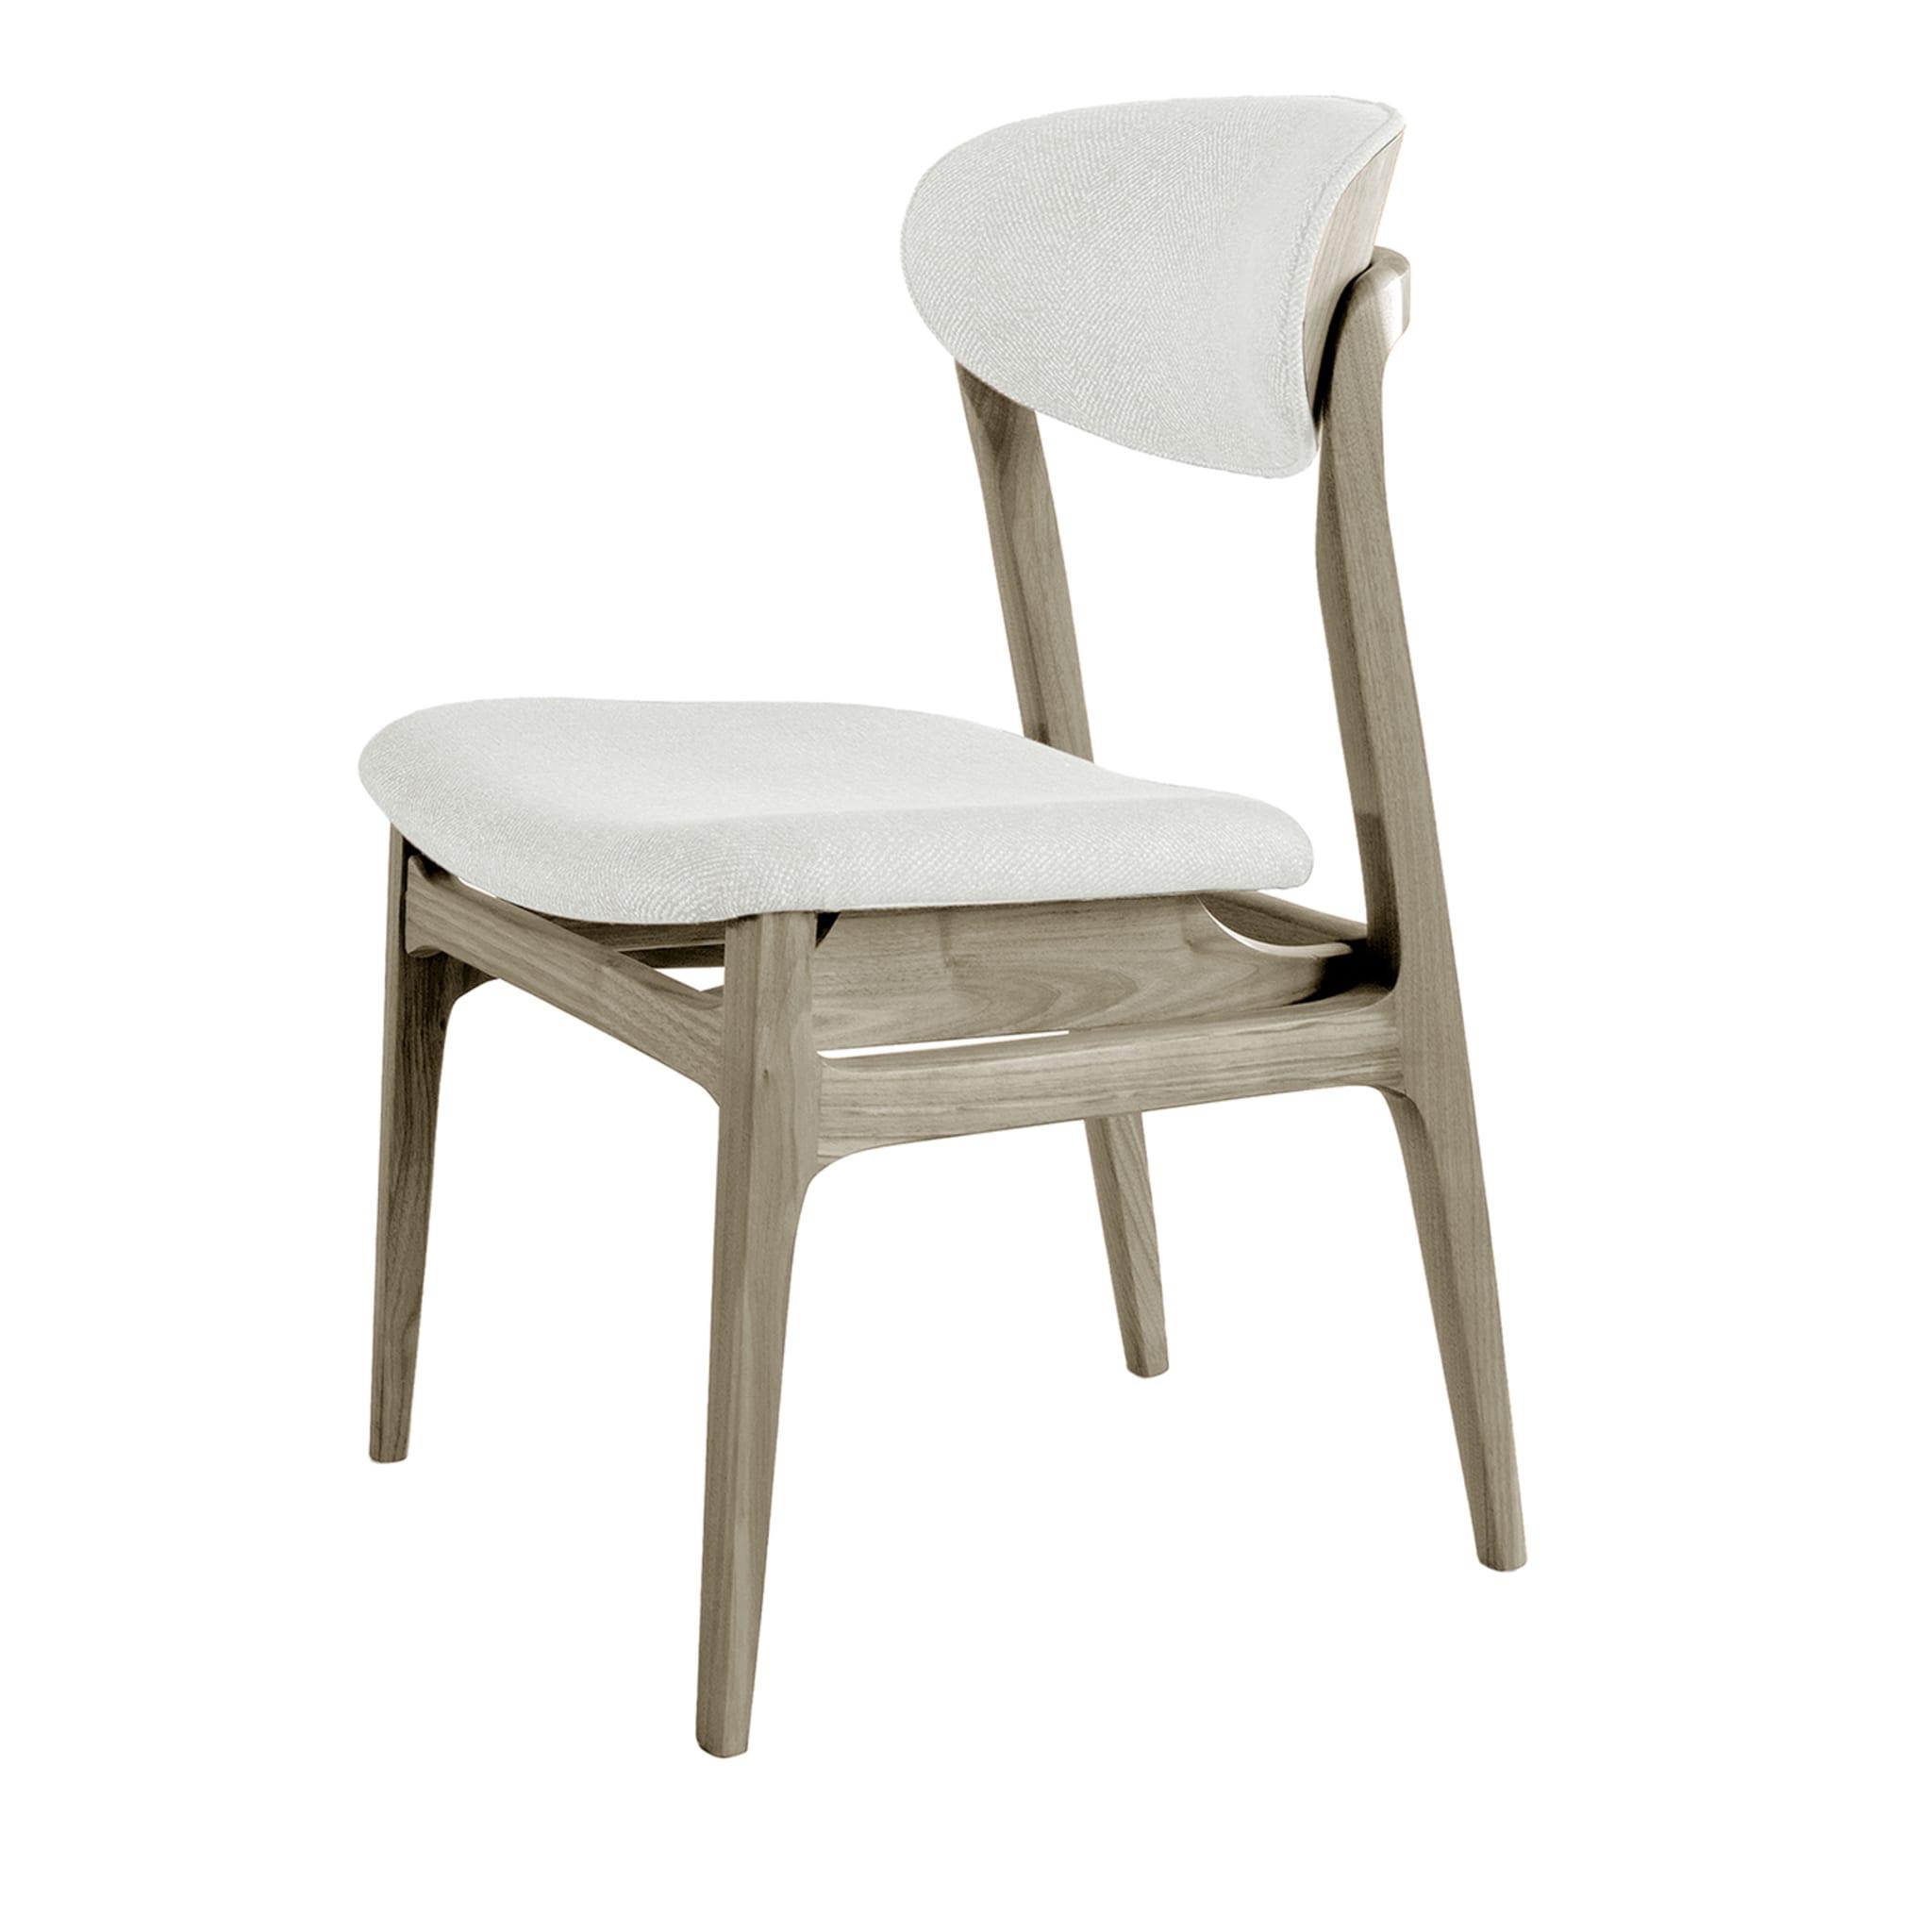 Agio White and Grey Designer Chair